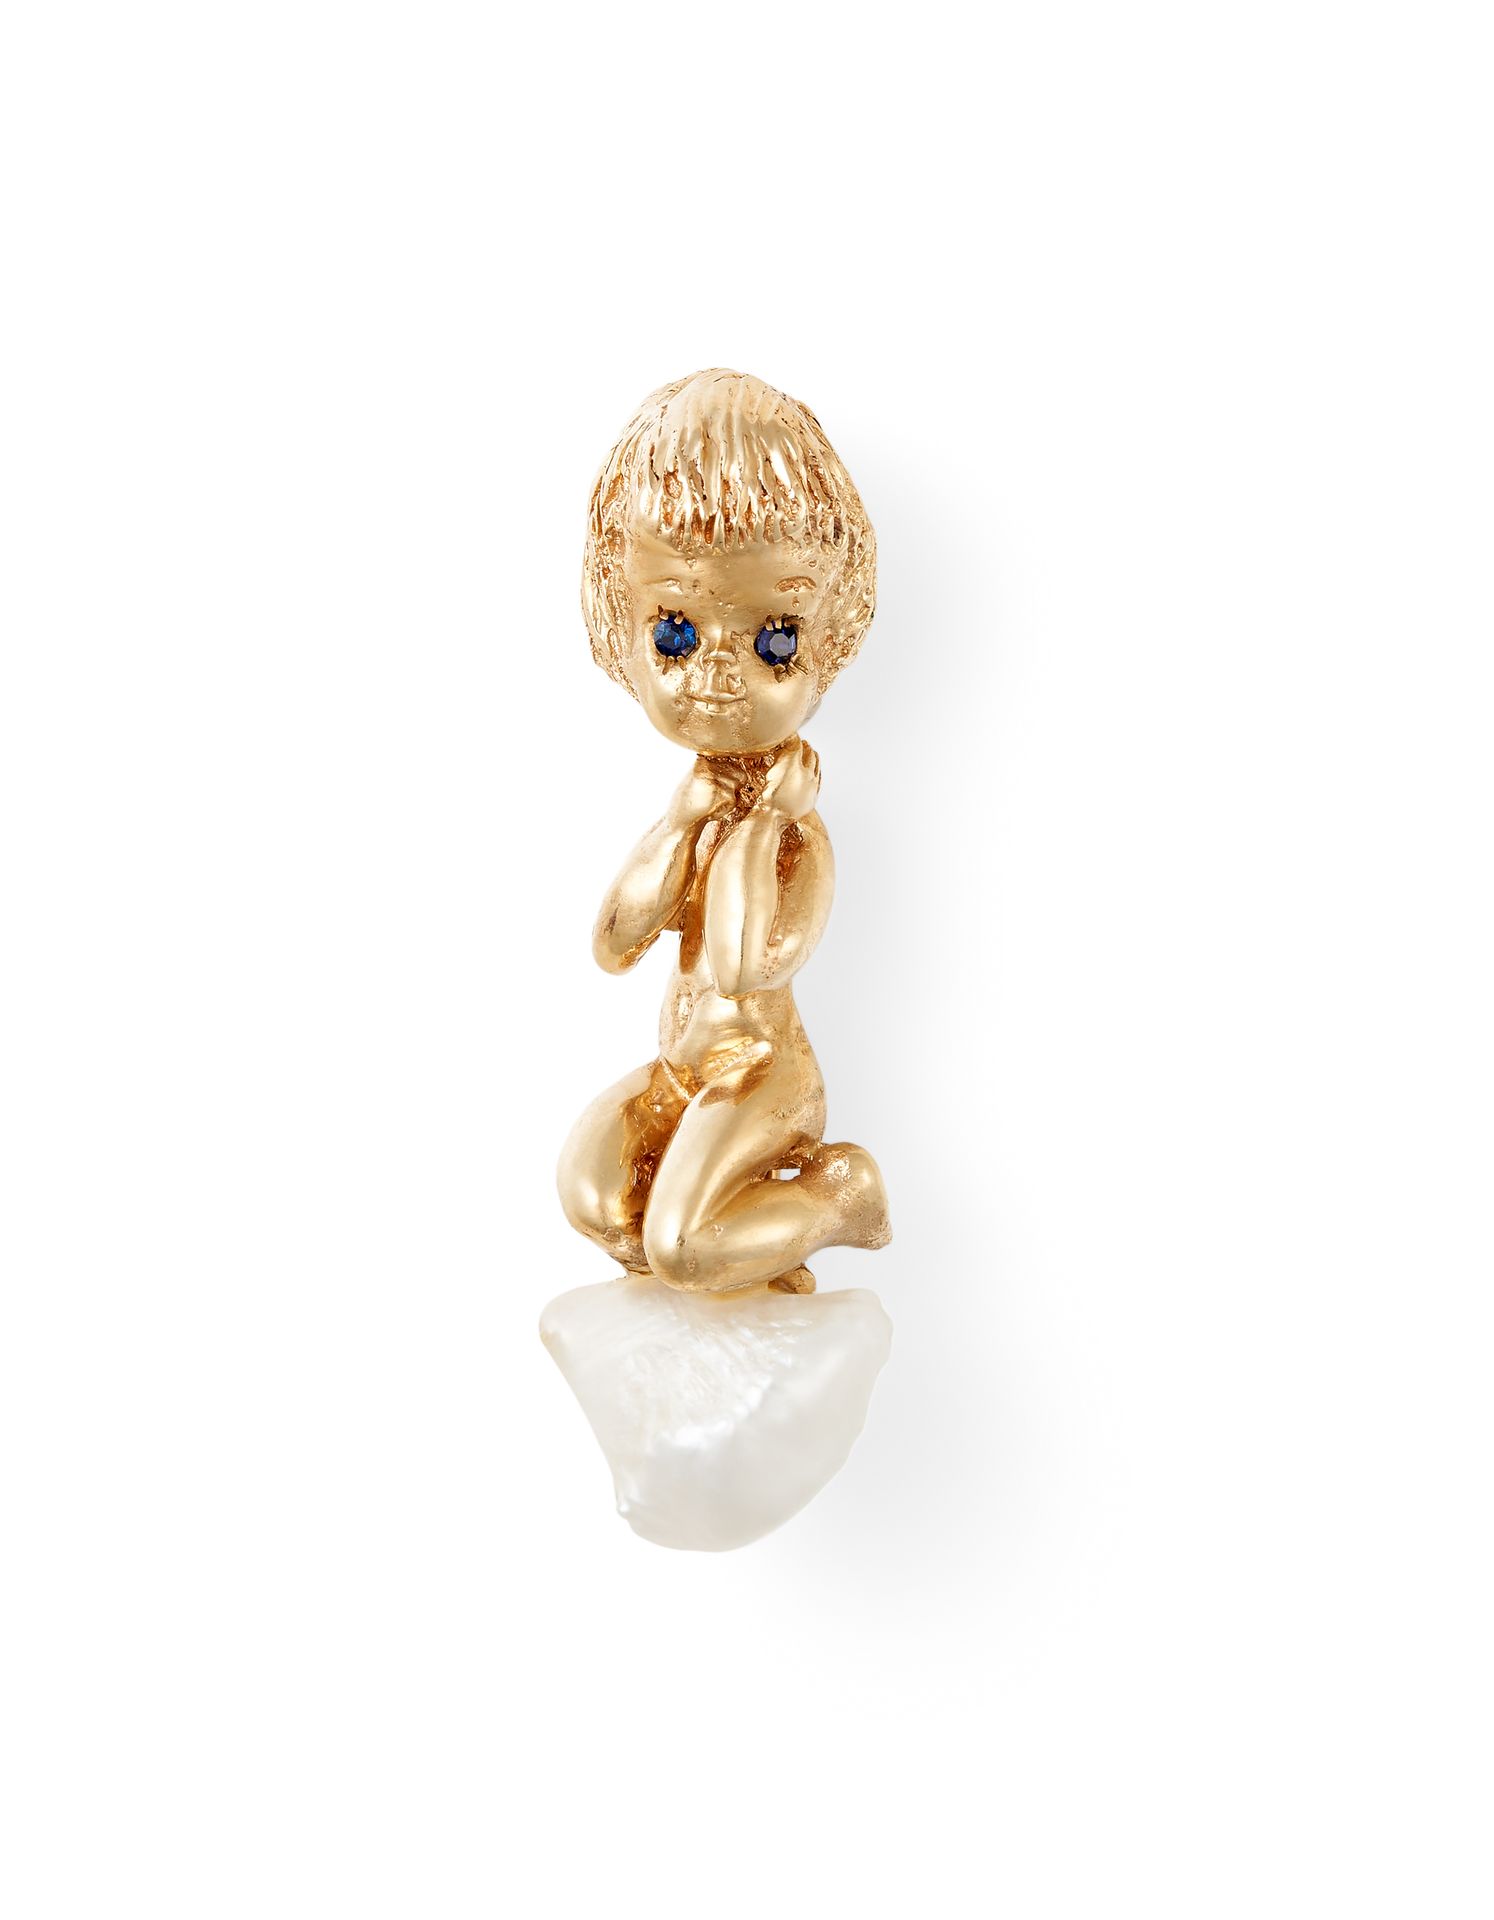 Null WILLIAM RUSER CHERUB BROOCH 14K黄金材质，描绘了一个跪在淡水巴洛克珍珠上的小天使，60年代。

标记。14K

已签名。&hellip;